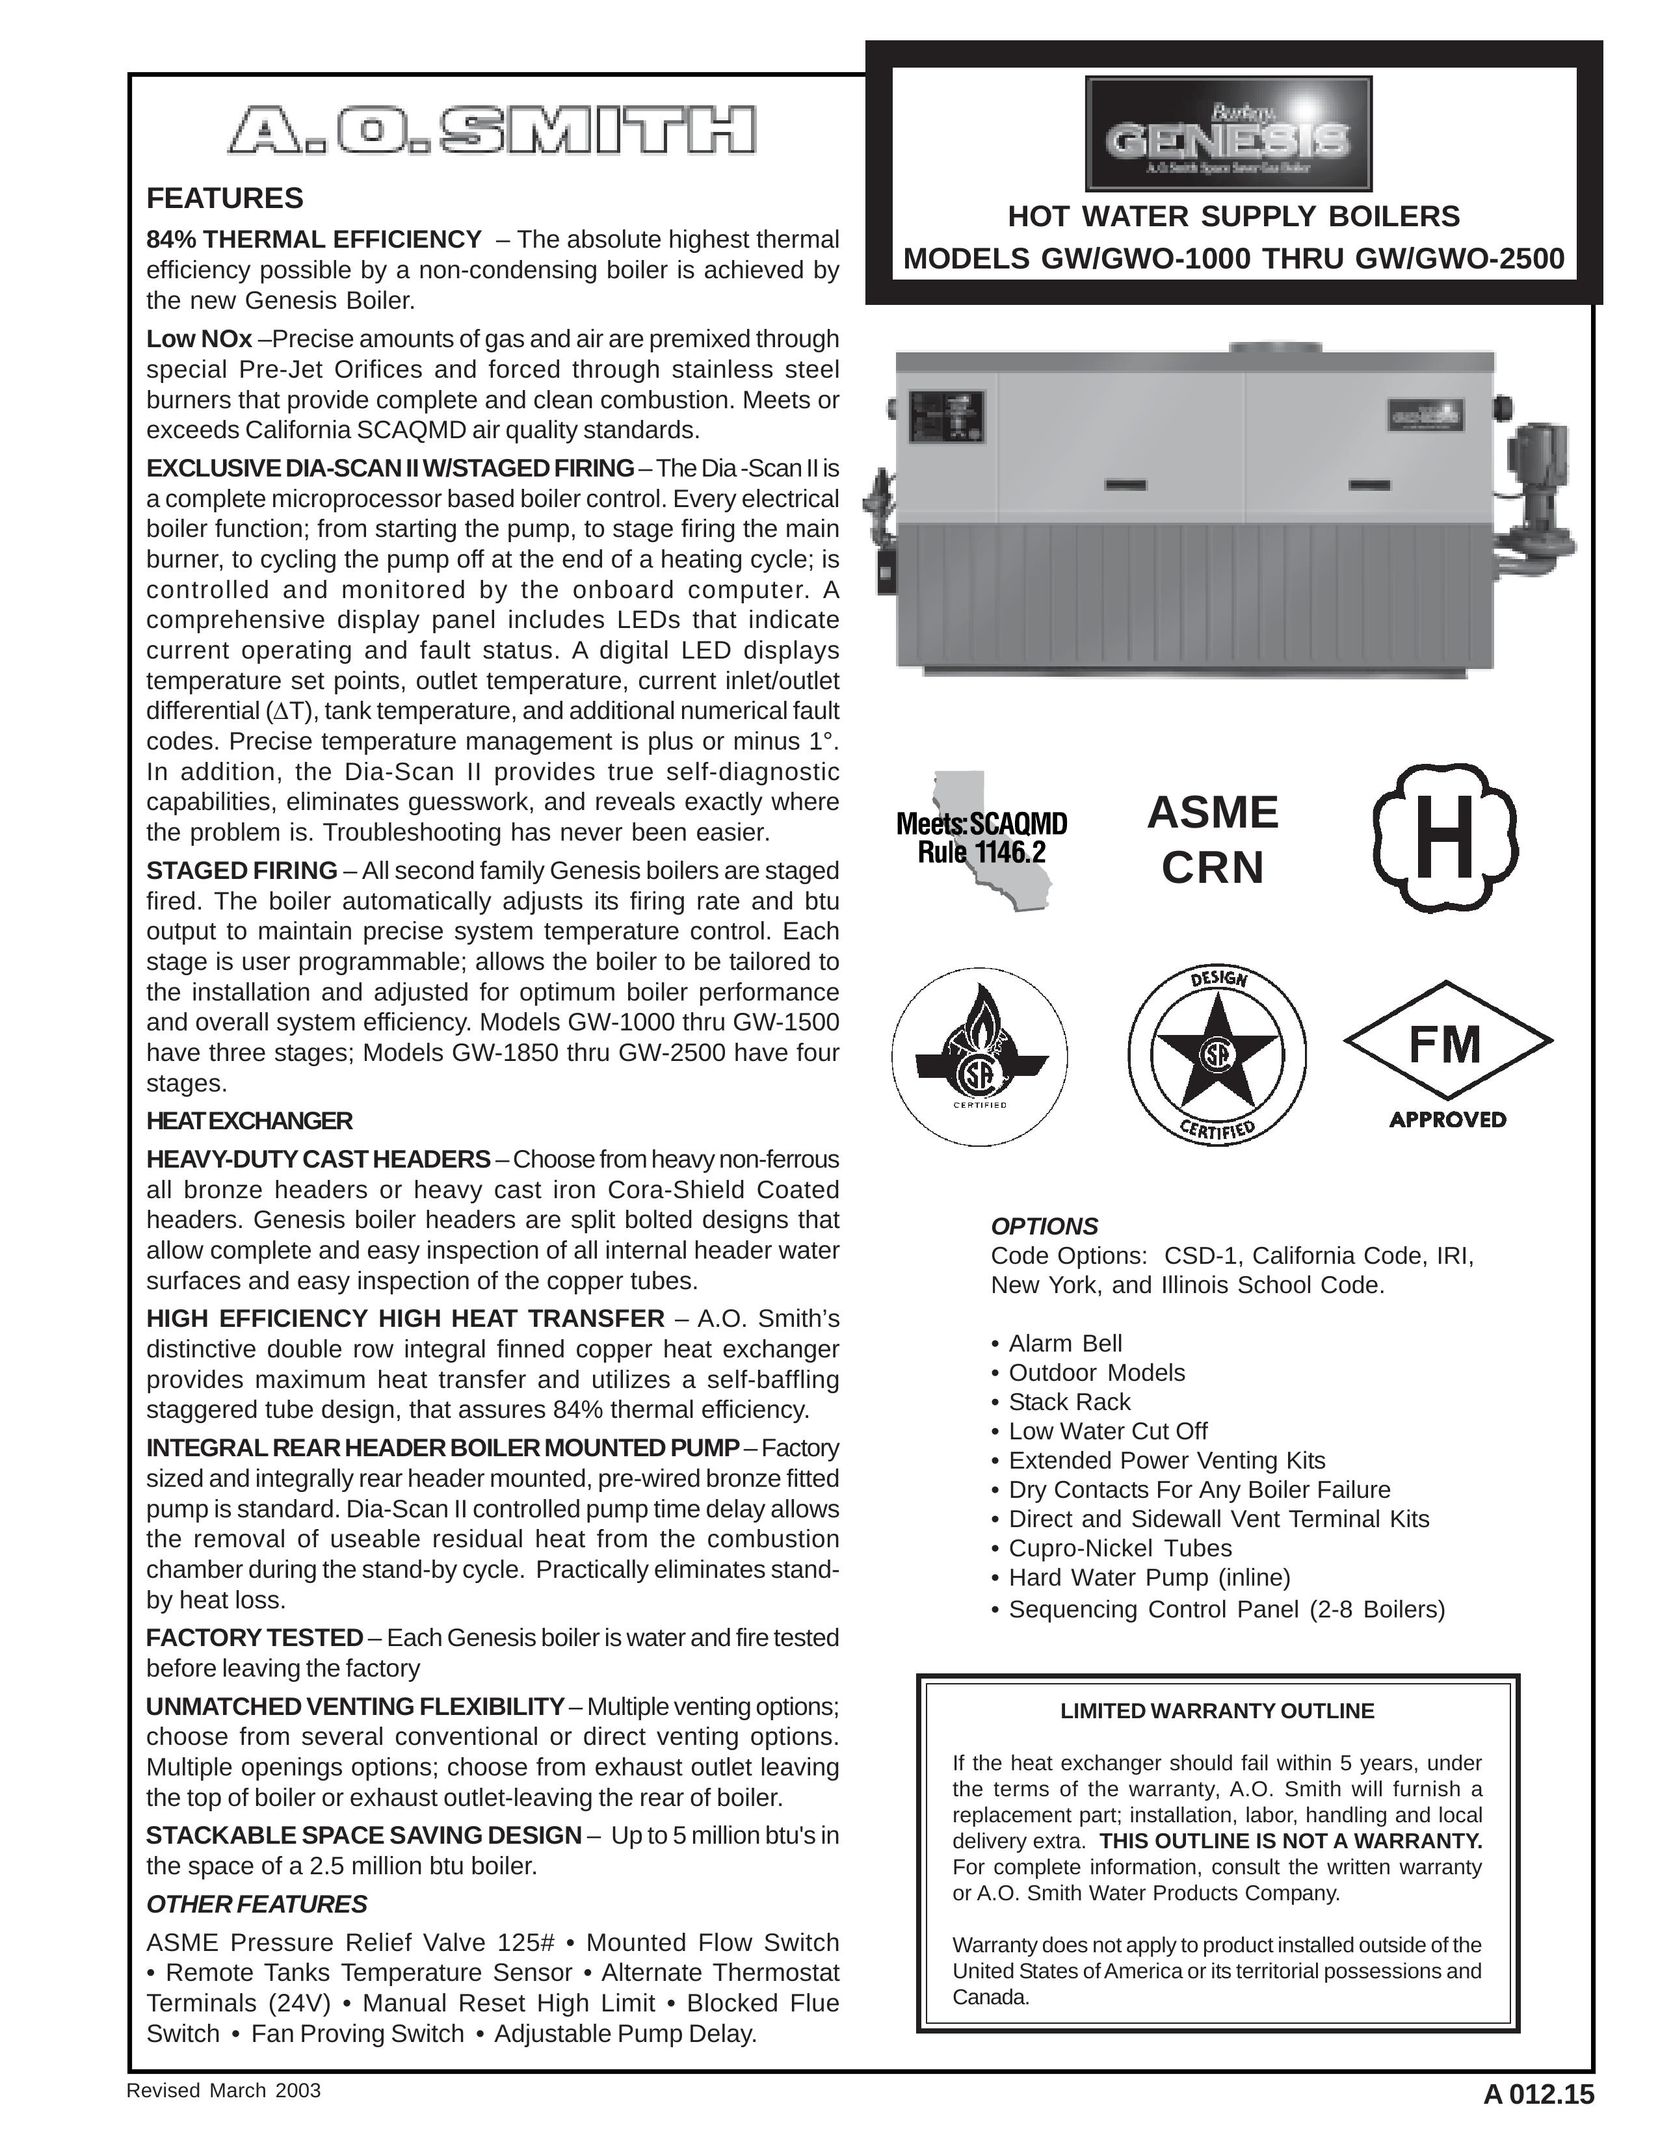 A.O. Smith GW/GWO-1000 Boiler User Manual (Page 1)